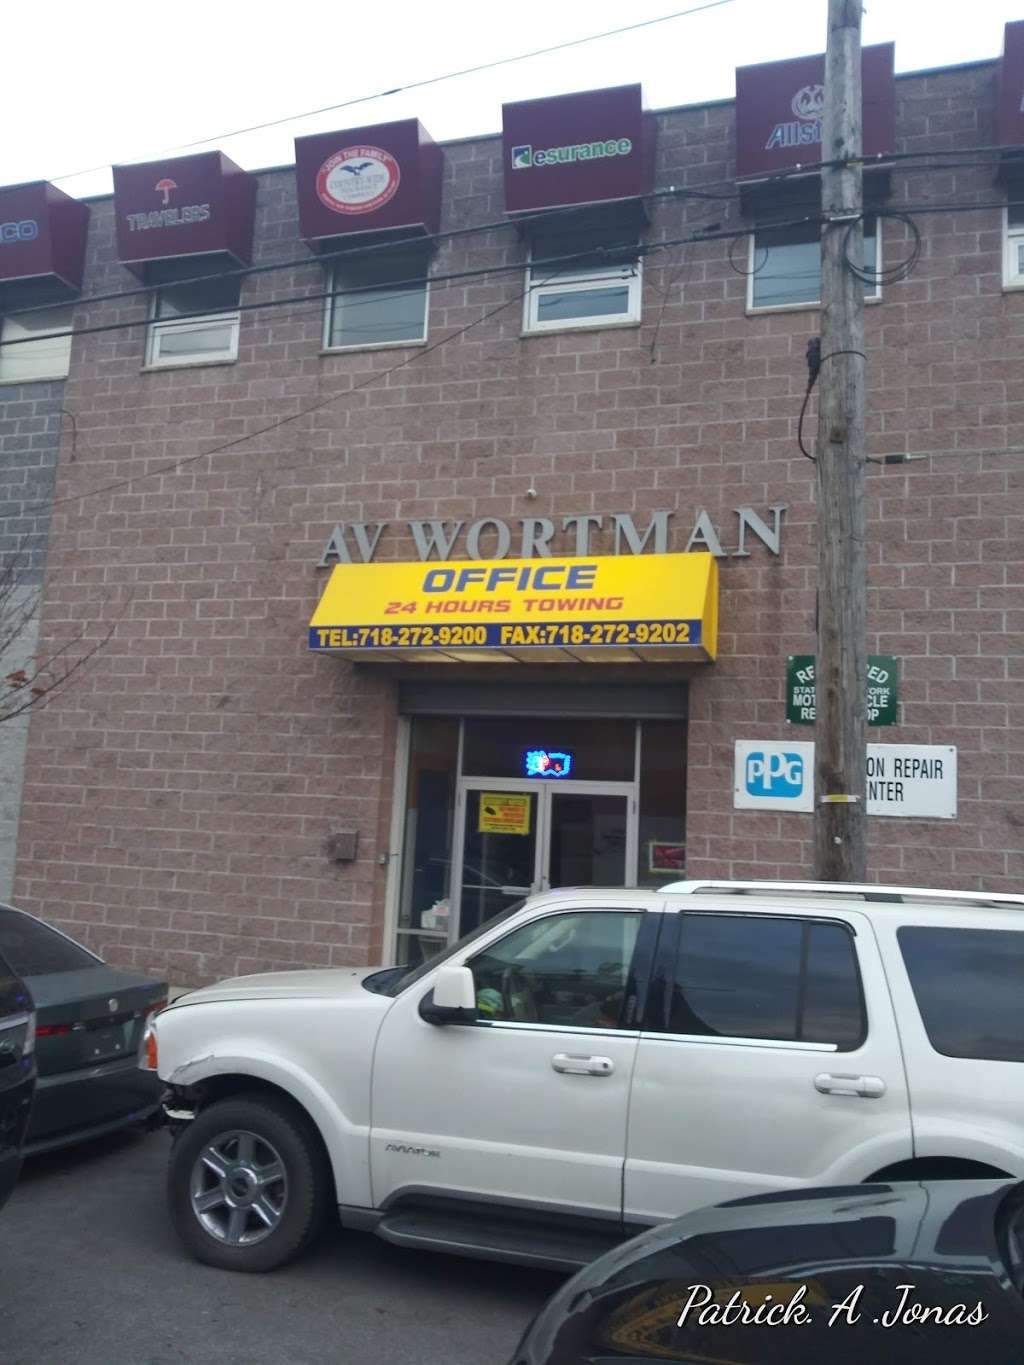 Asshured Auto & Repair | 507 Wortman Ave, Brooklyn, NY 11208 | Phone: (718) 272-9200